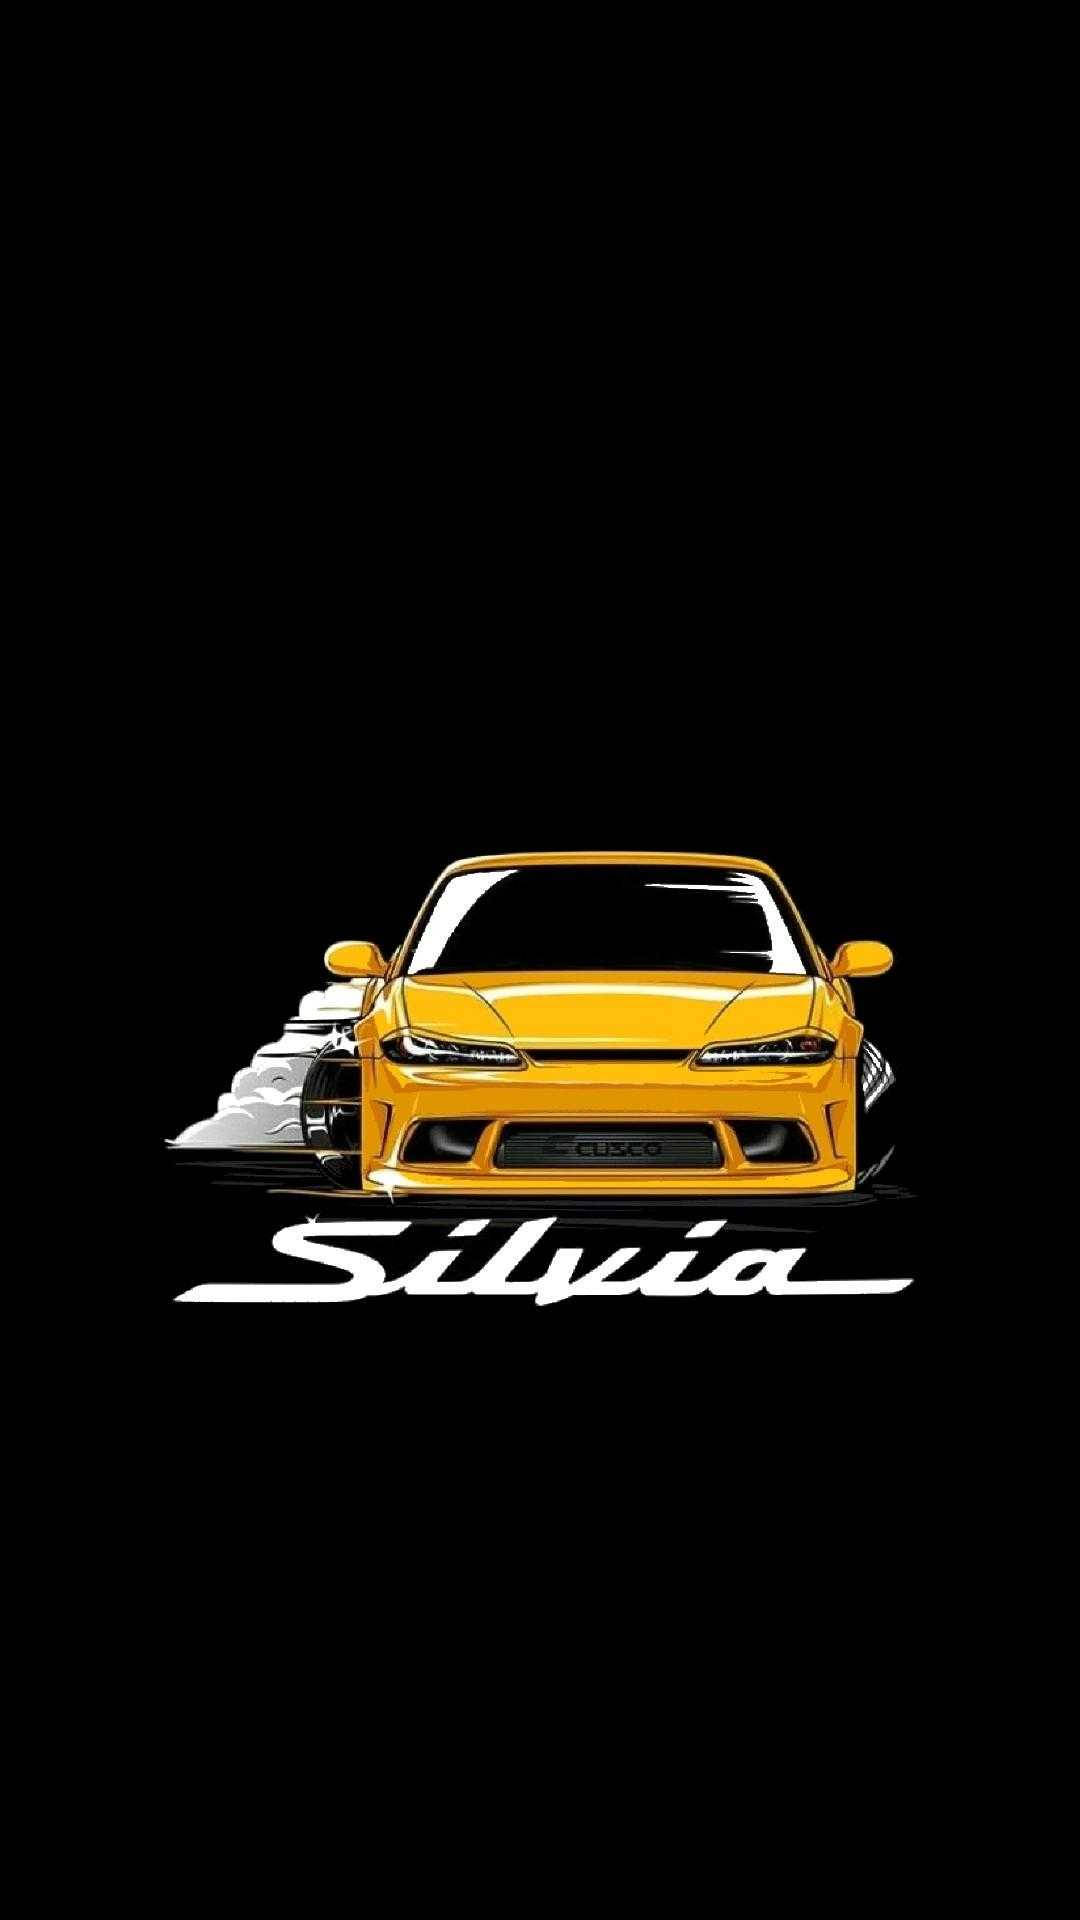 Jdm Aesthetic Nissan Silvia Art Background